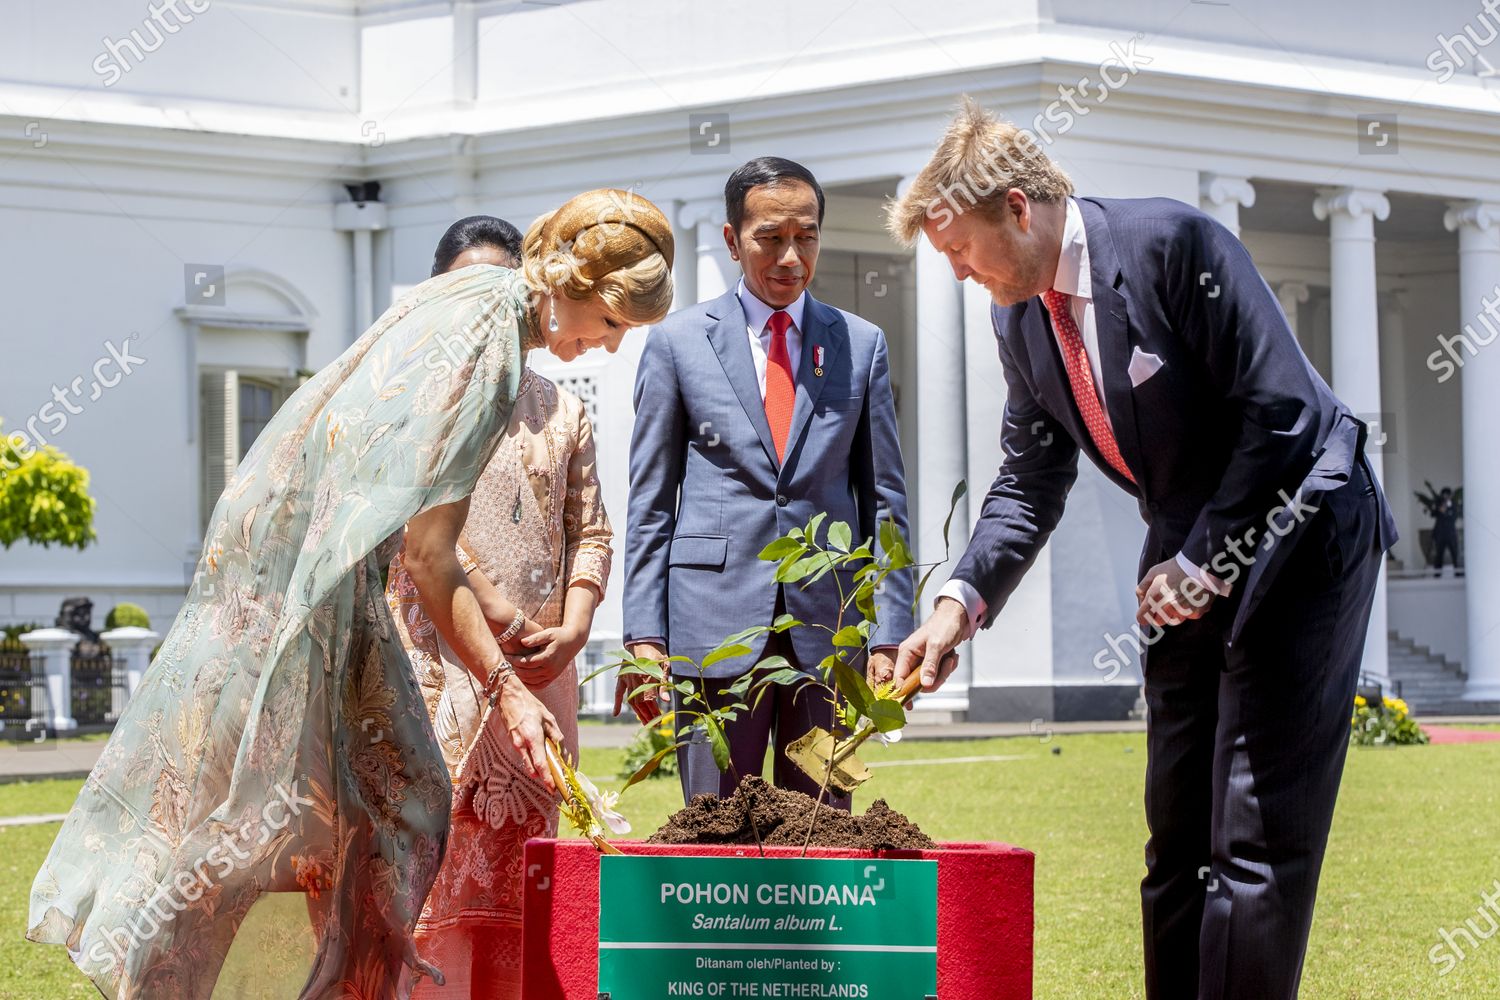 dutch-royals-visit-to-indonesia-shutterstock-editorial-10578533af.jpg